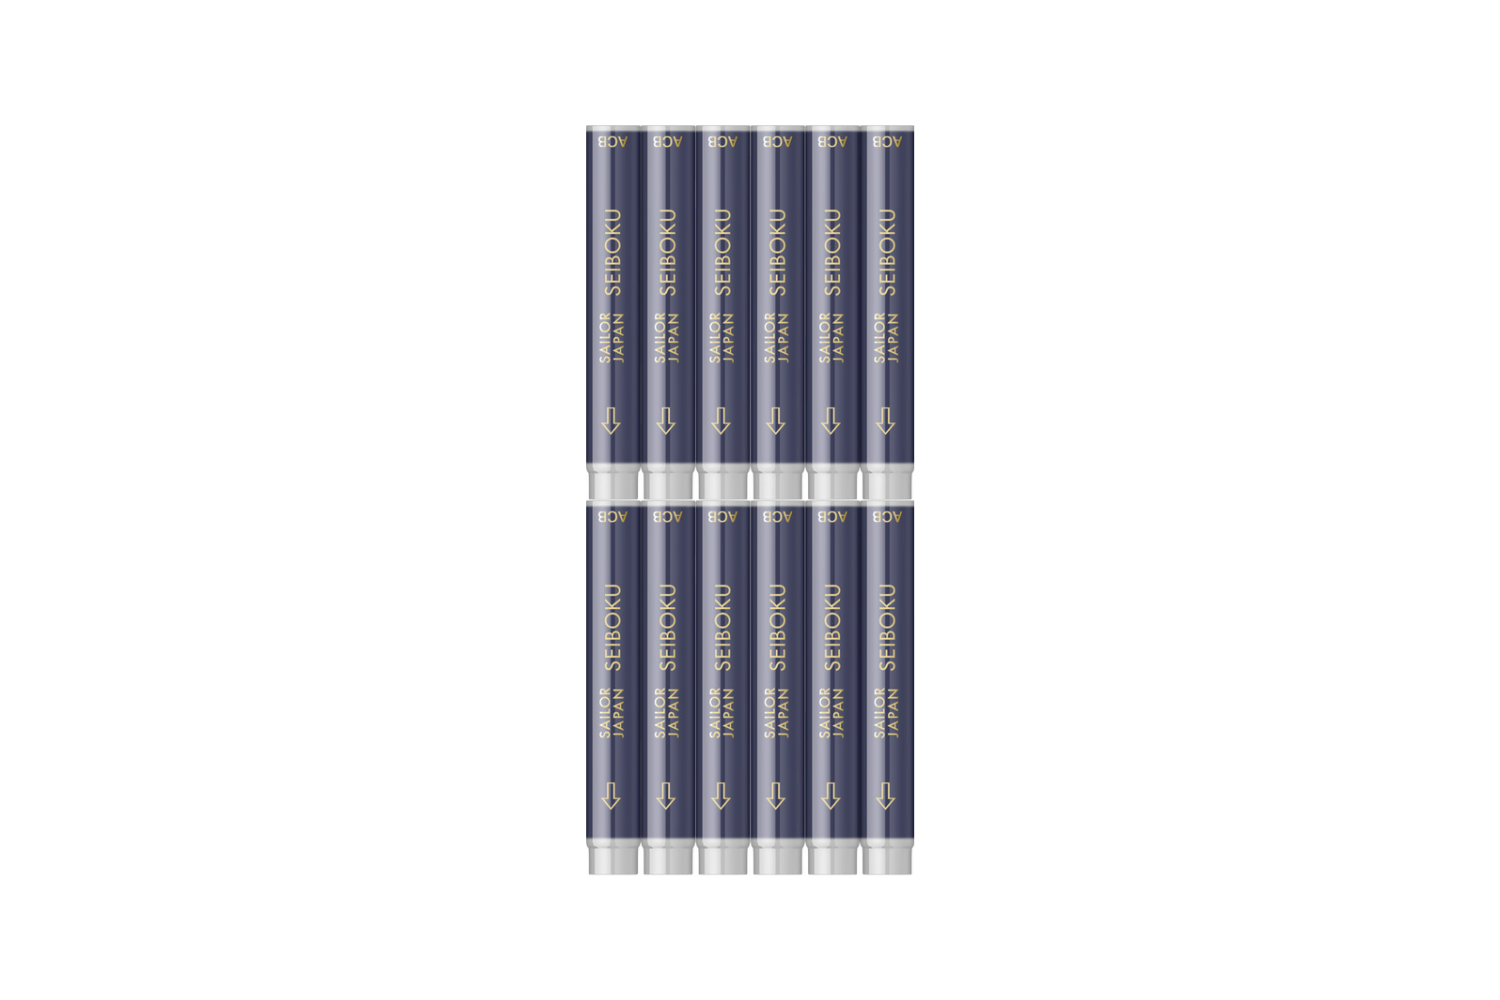 Sailor Pigment Sei-Boku Dark Blue | Permanent | - Ink Cartridges (12)